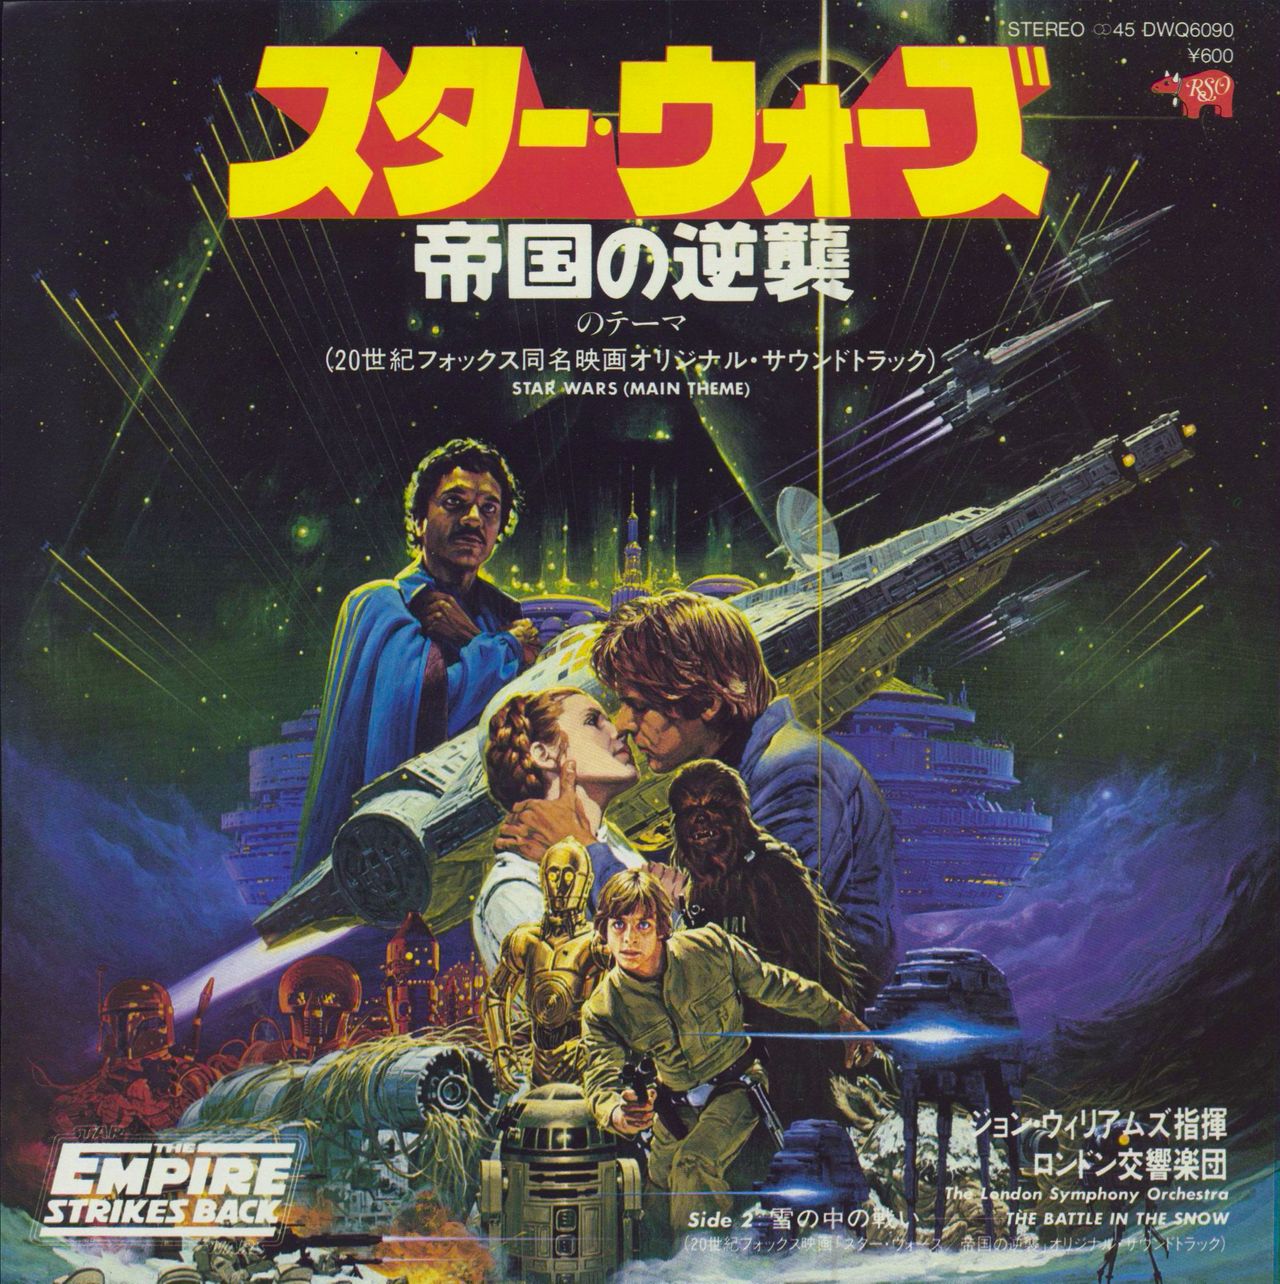 Star Wars Star Wars (Main Theme) - The Empire Strikes Back Japanese 7" vinyl single (7 inch record / 45) DWQ6090